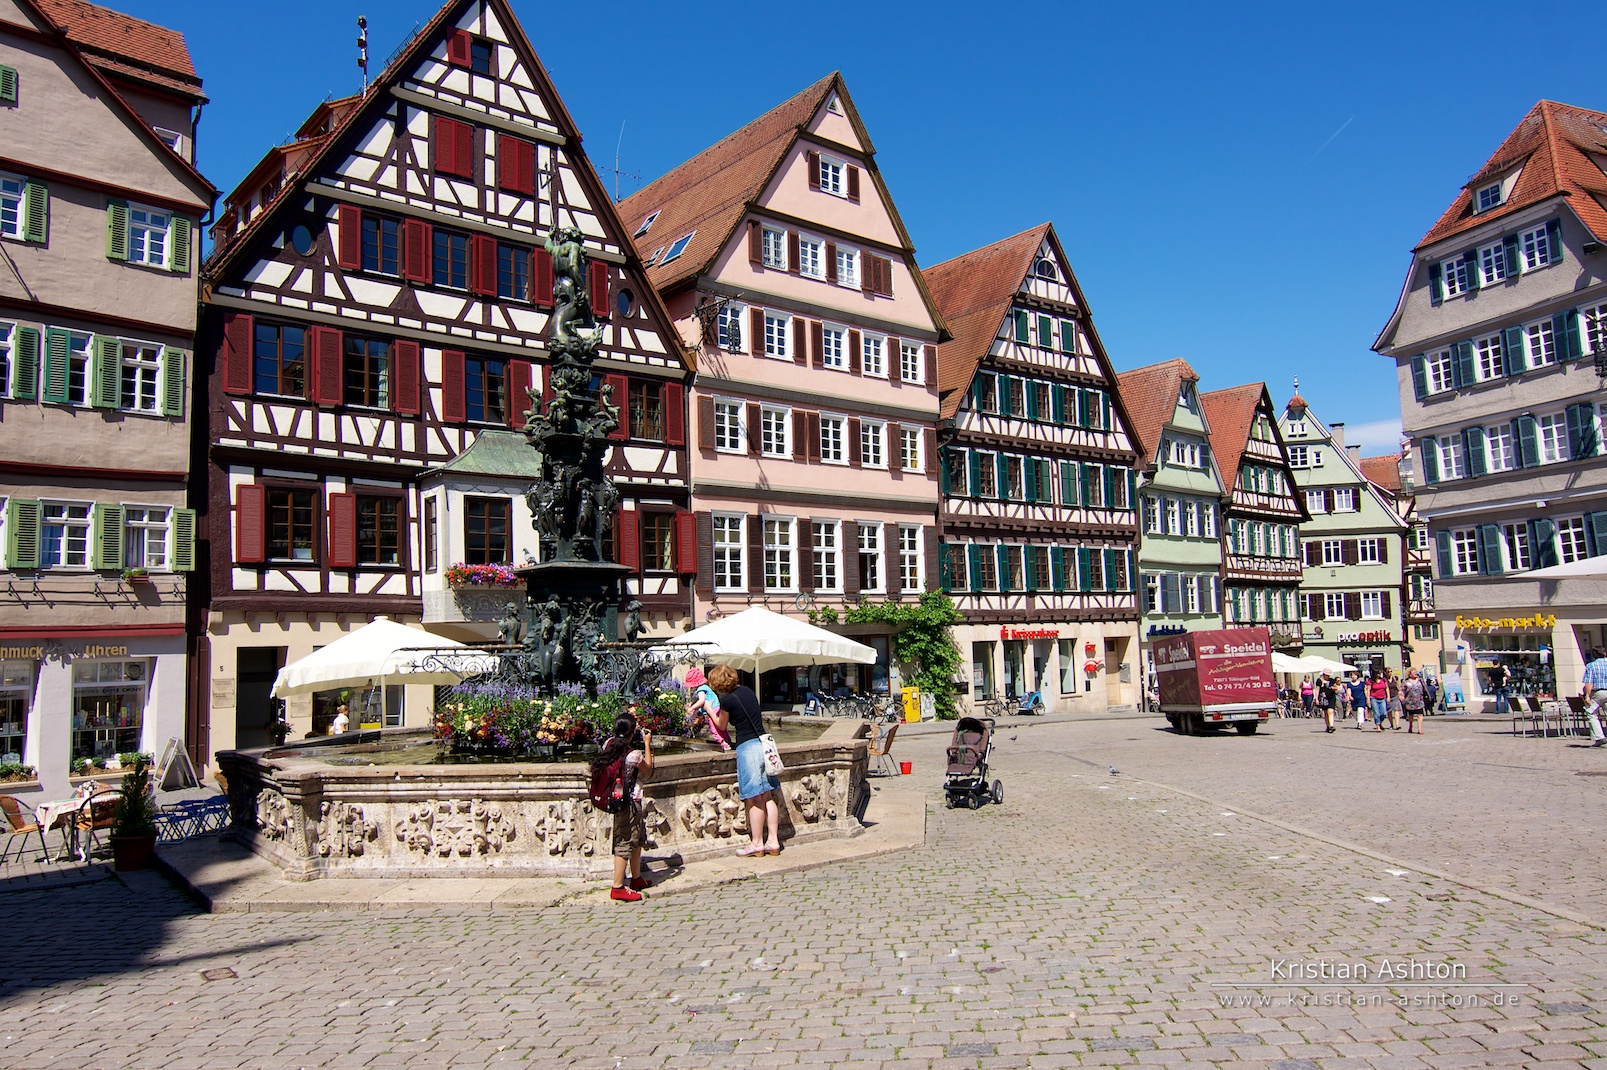 The Tübingen market square